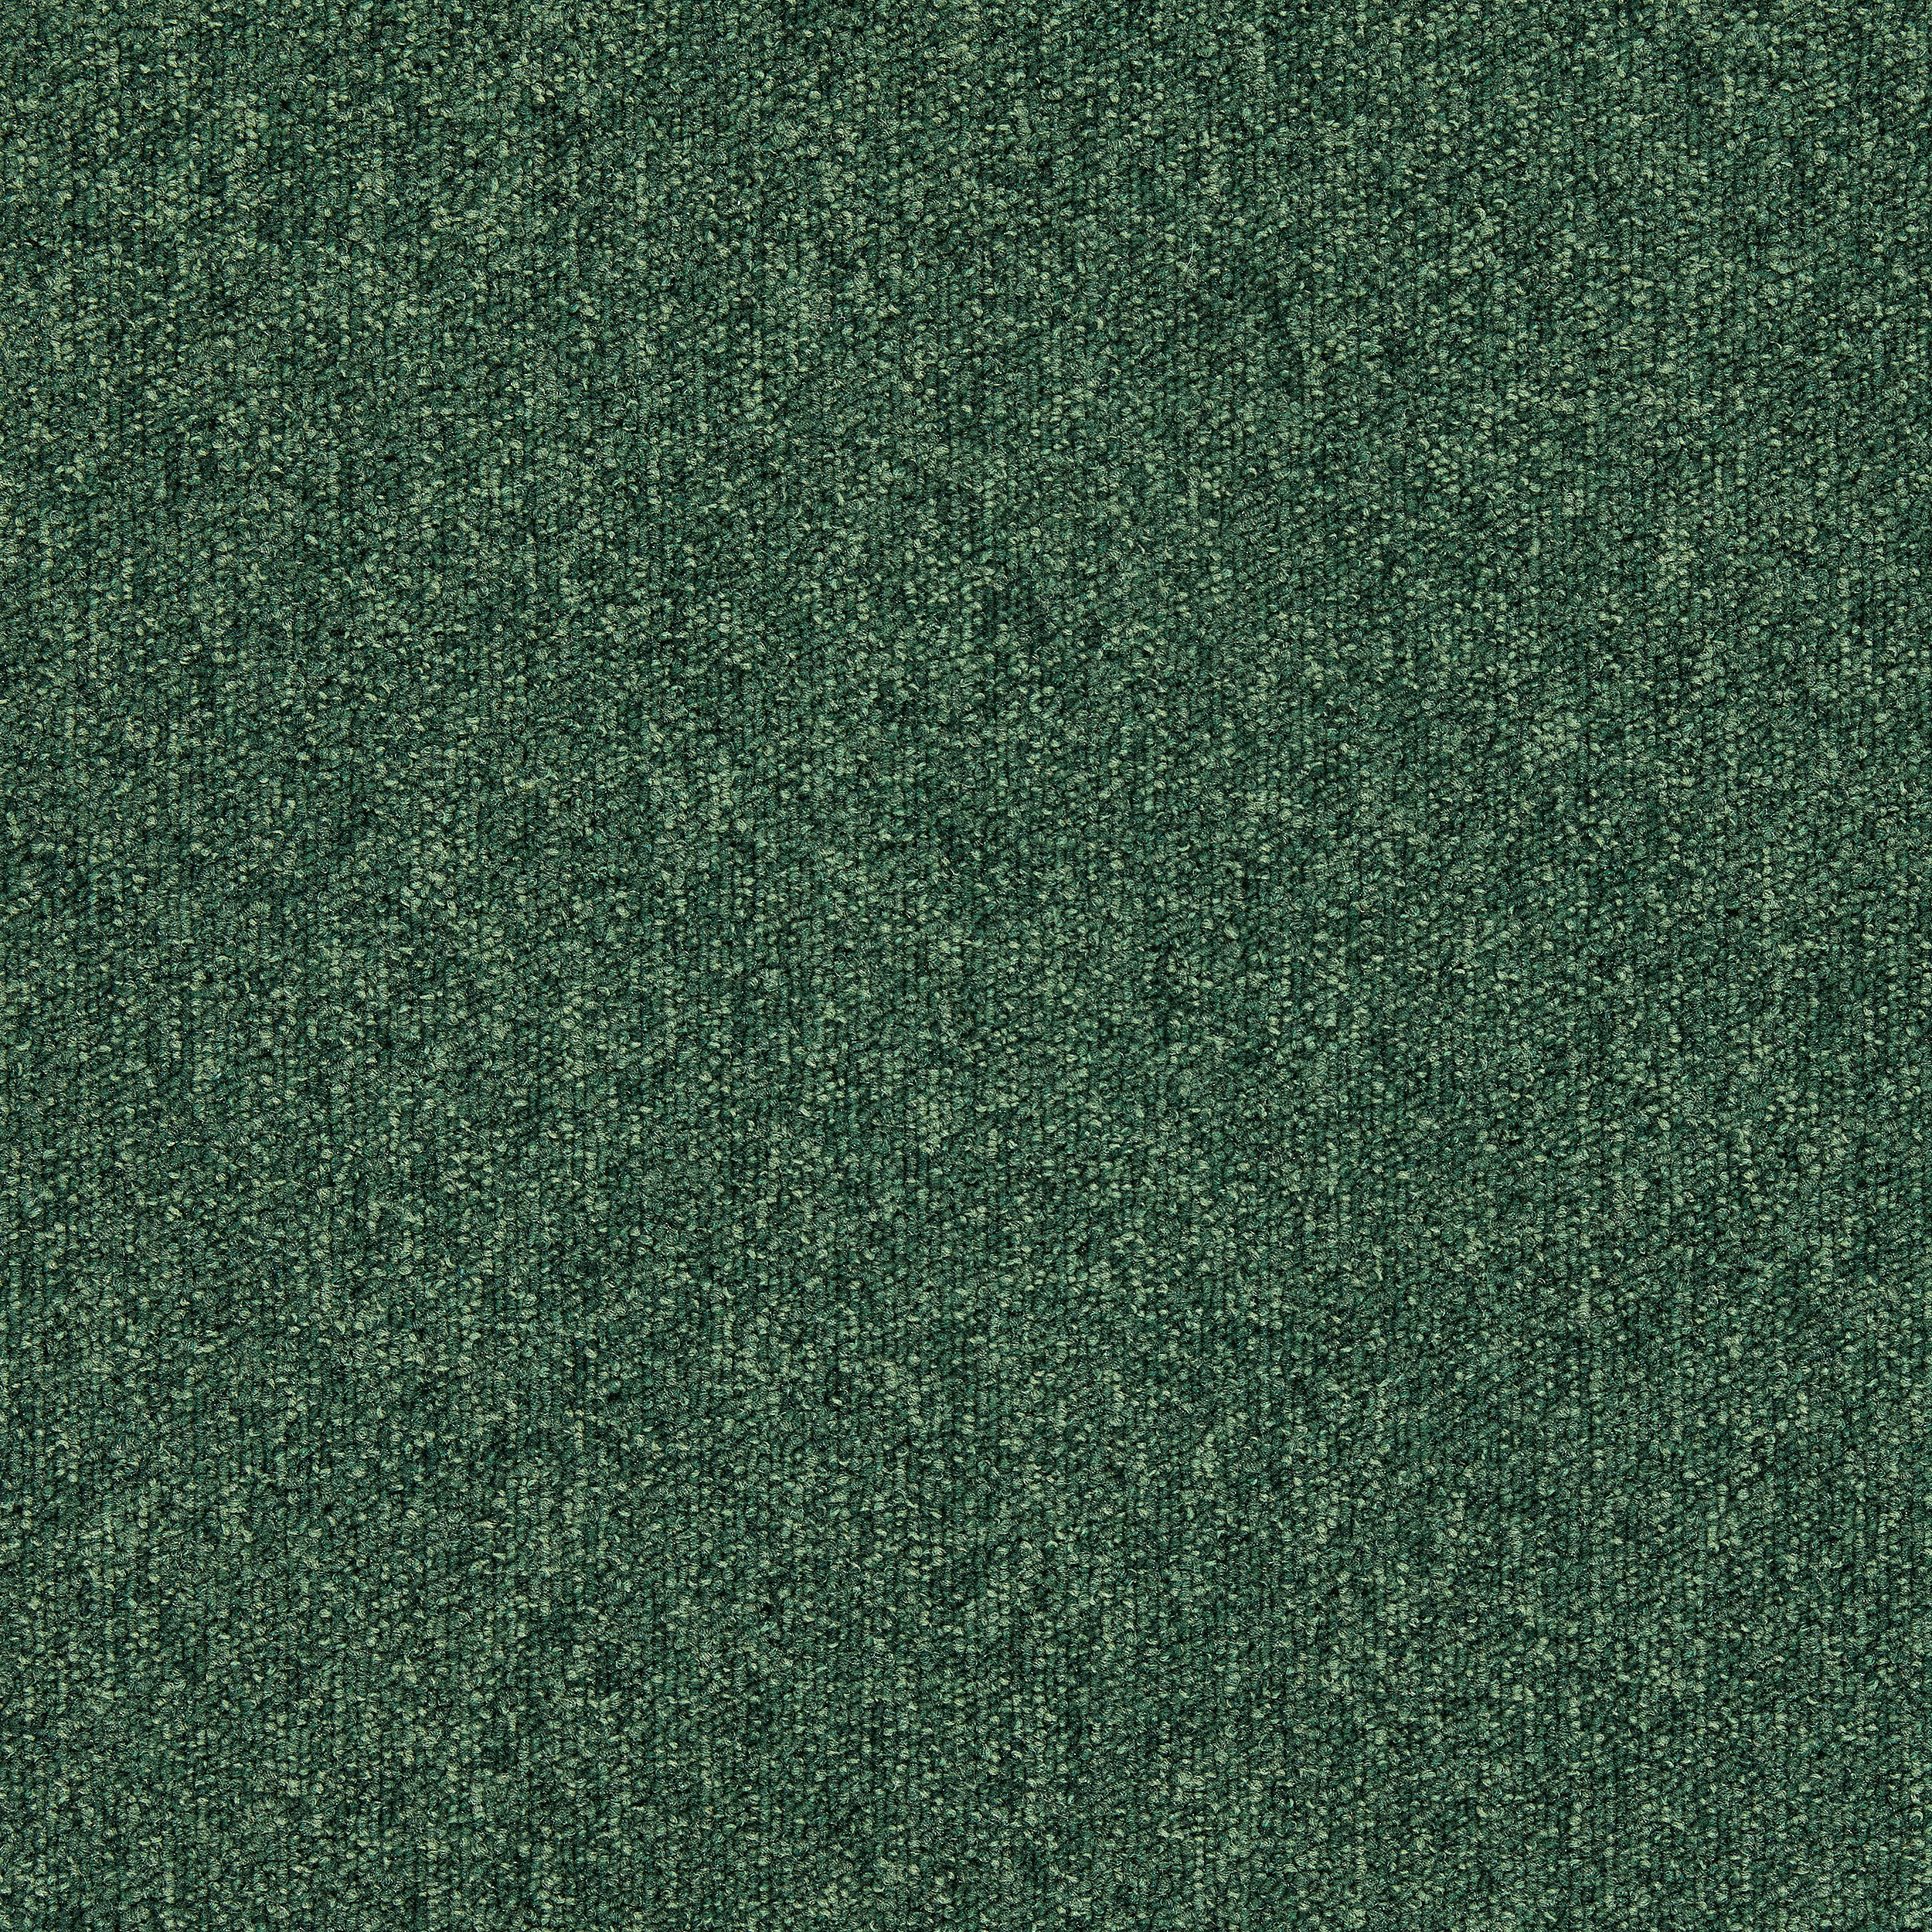 Heuga 727 Carpet Tile In Bottle Green número de imagen 19